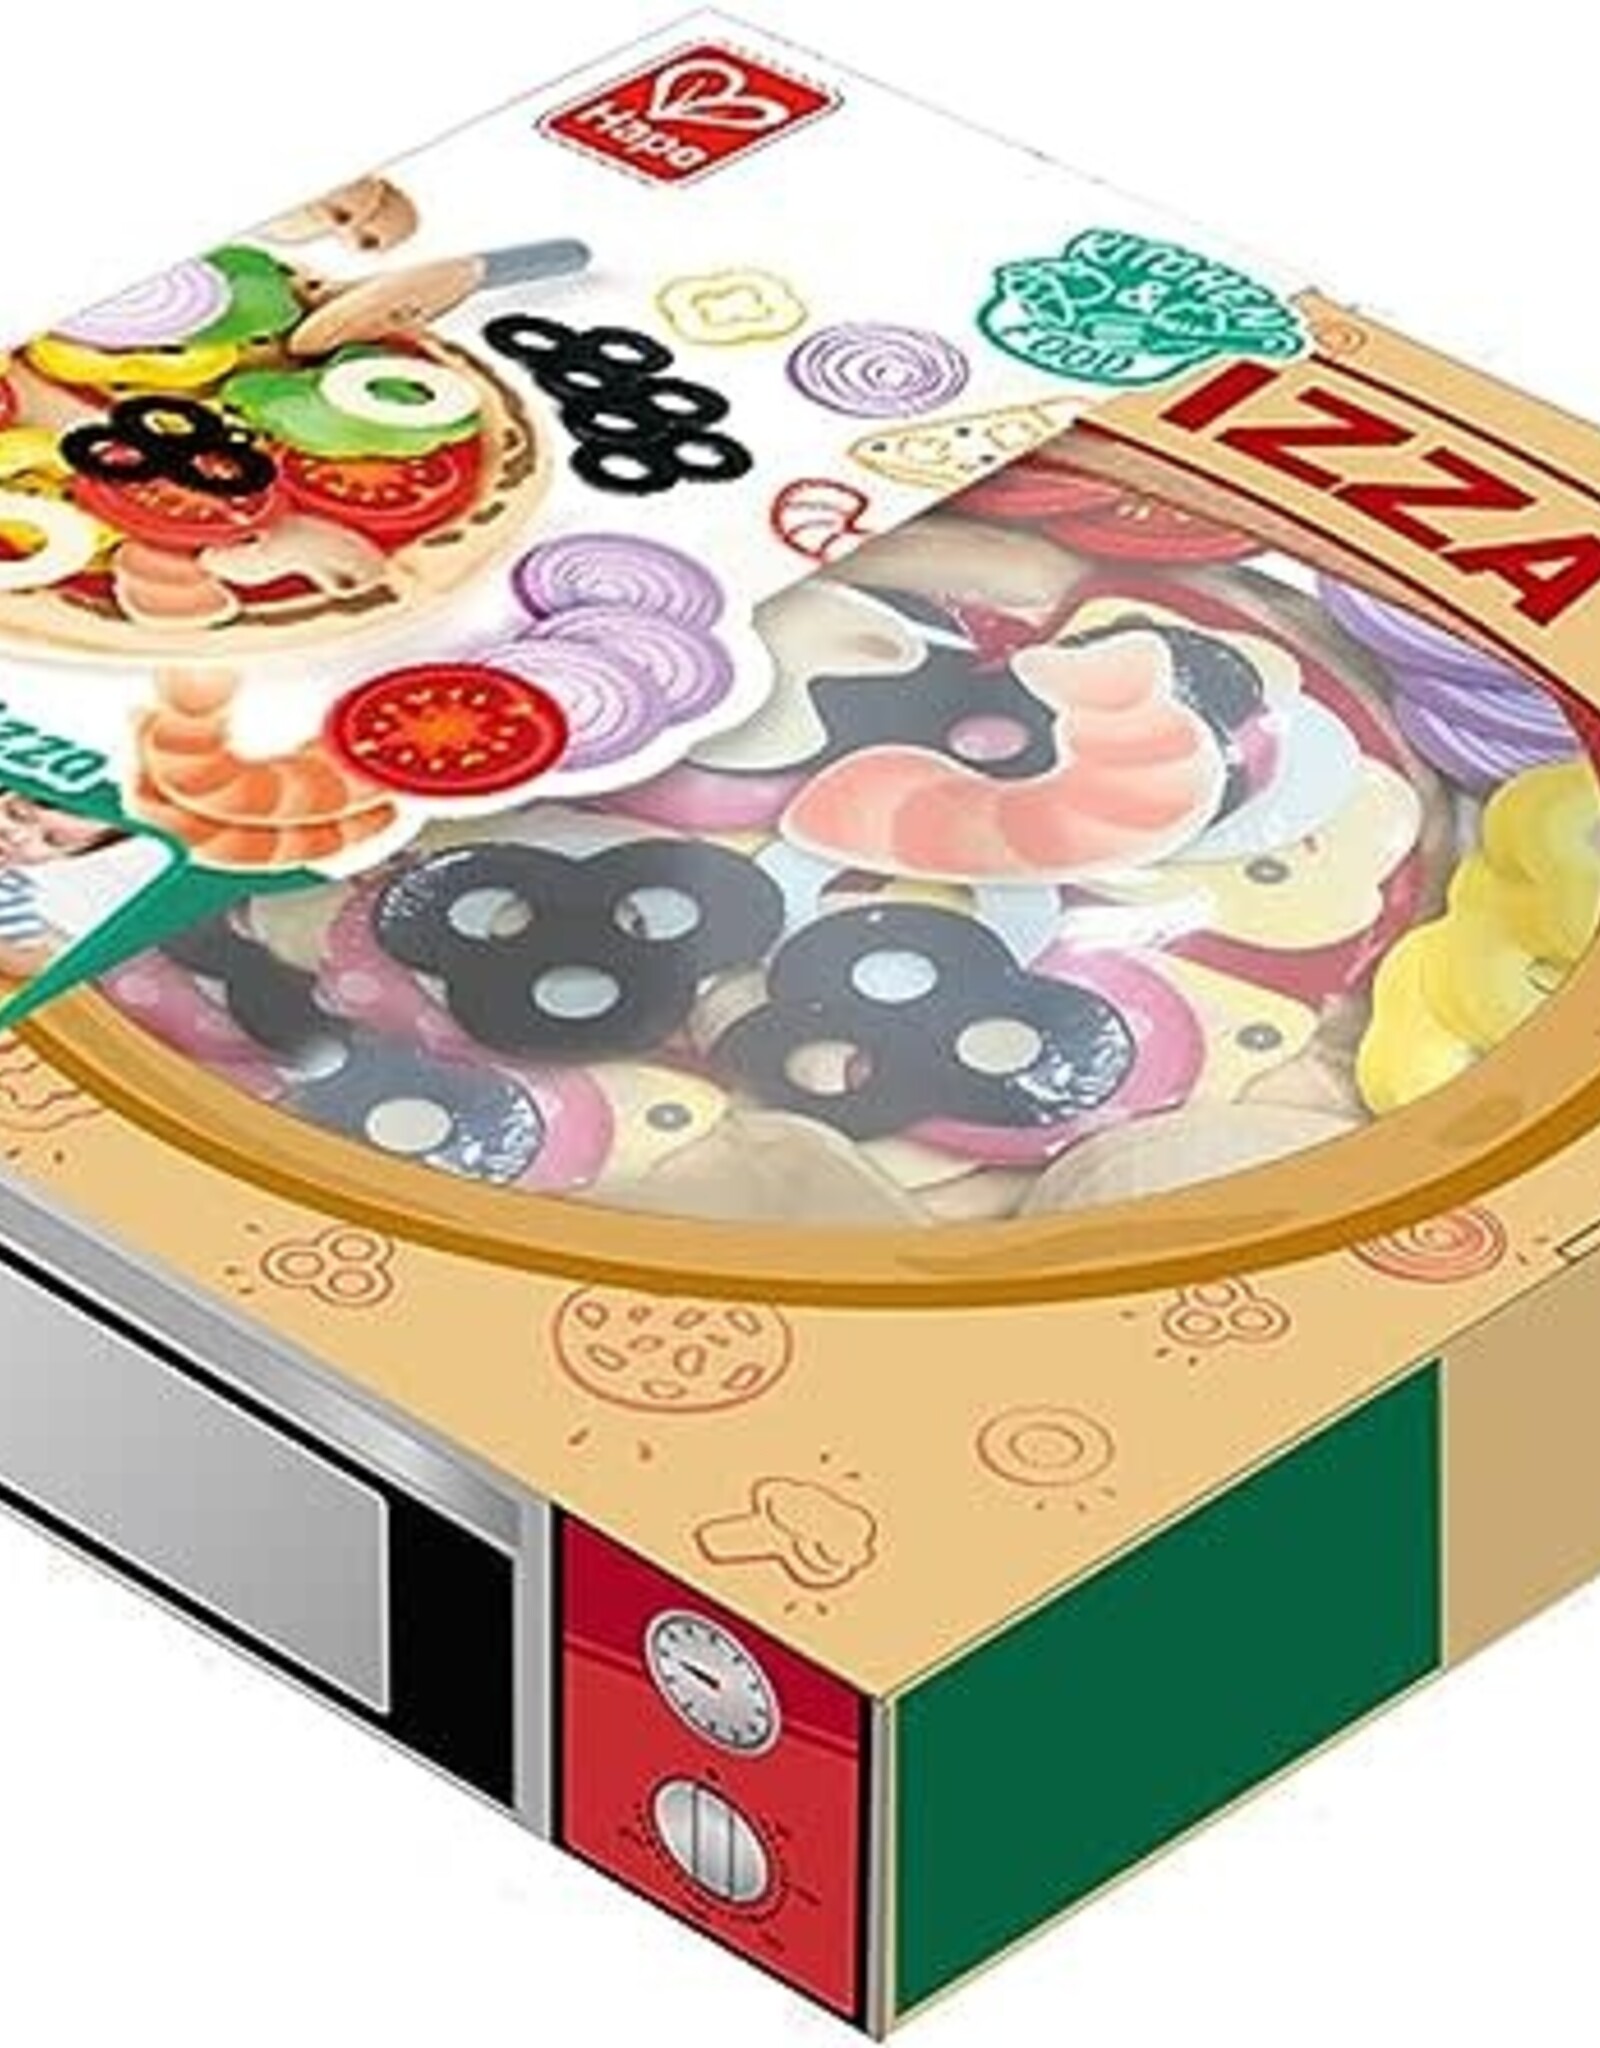 Hape Perfect Pizza Playset